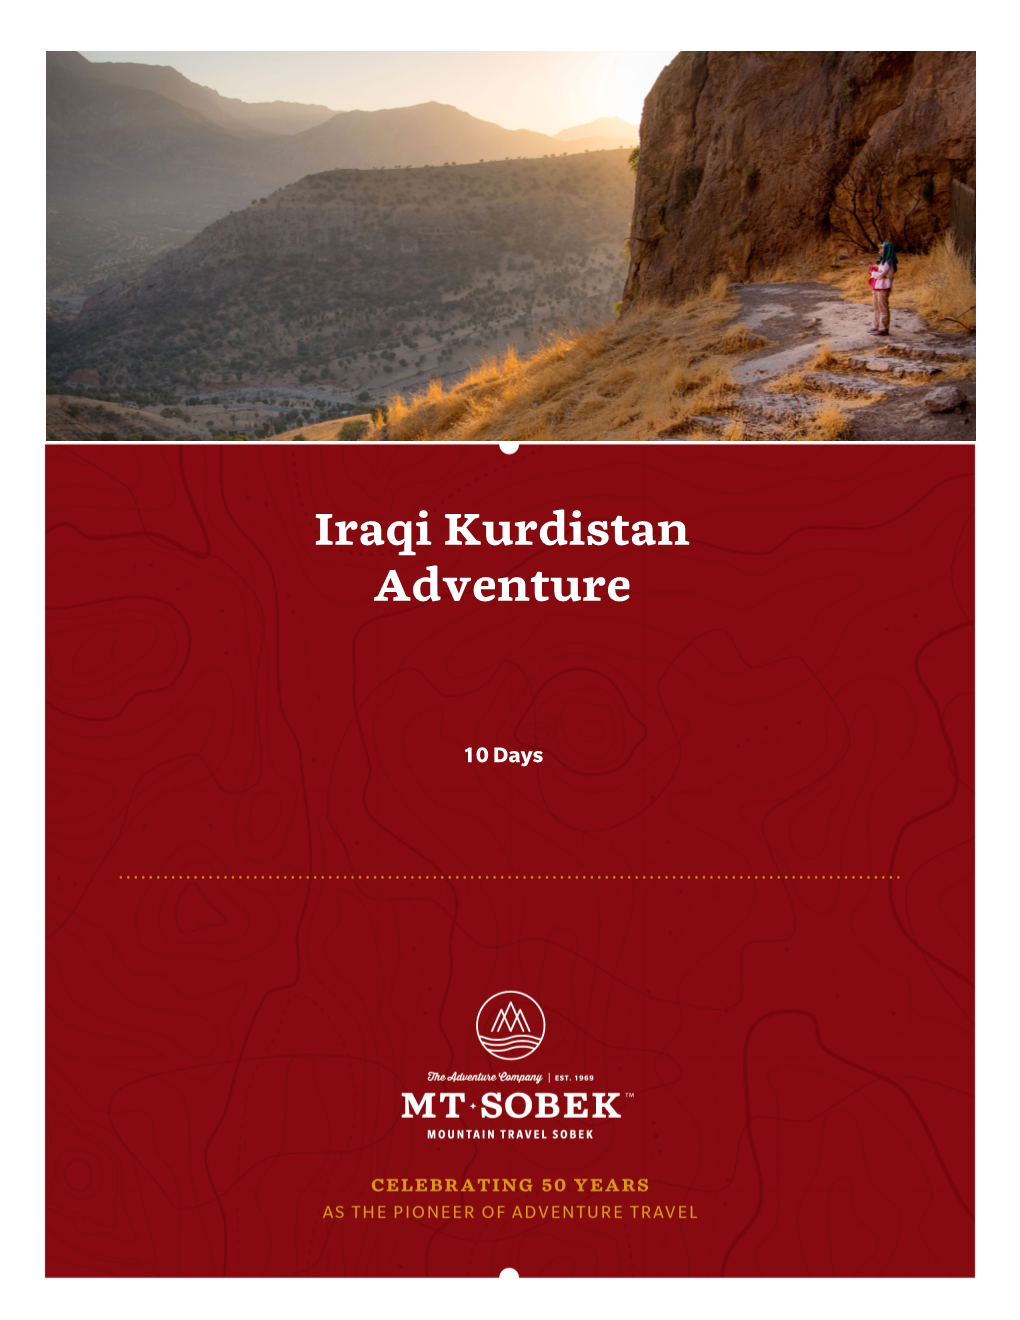 Iraqi Kurdistan Adventure